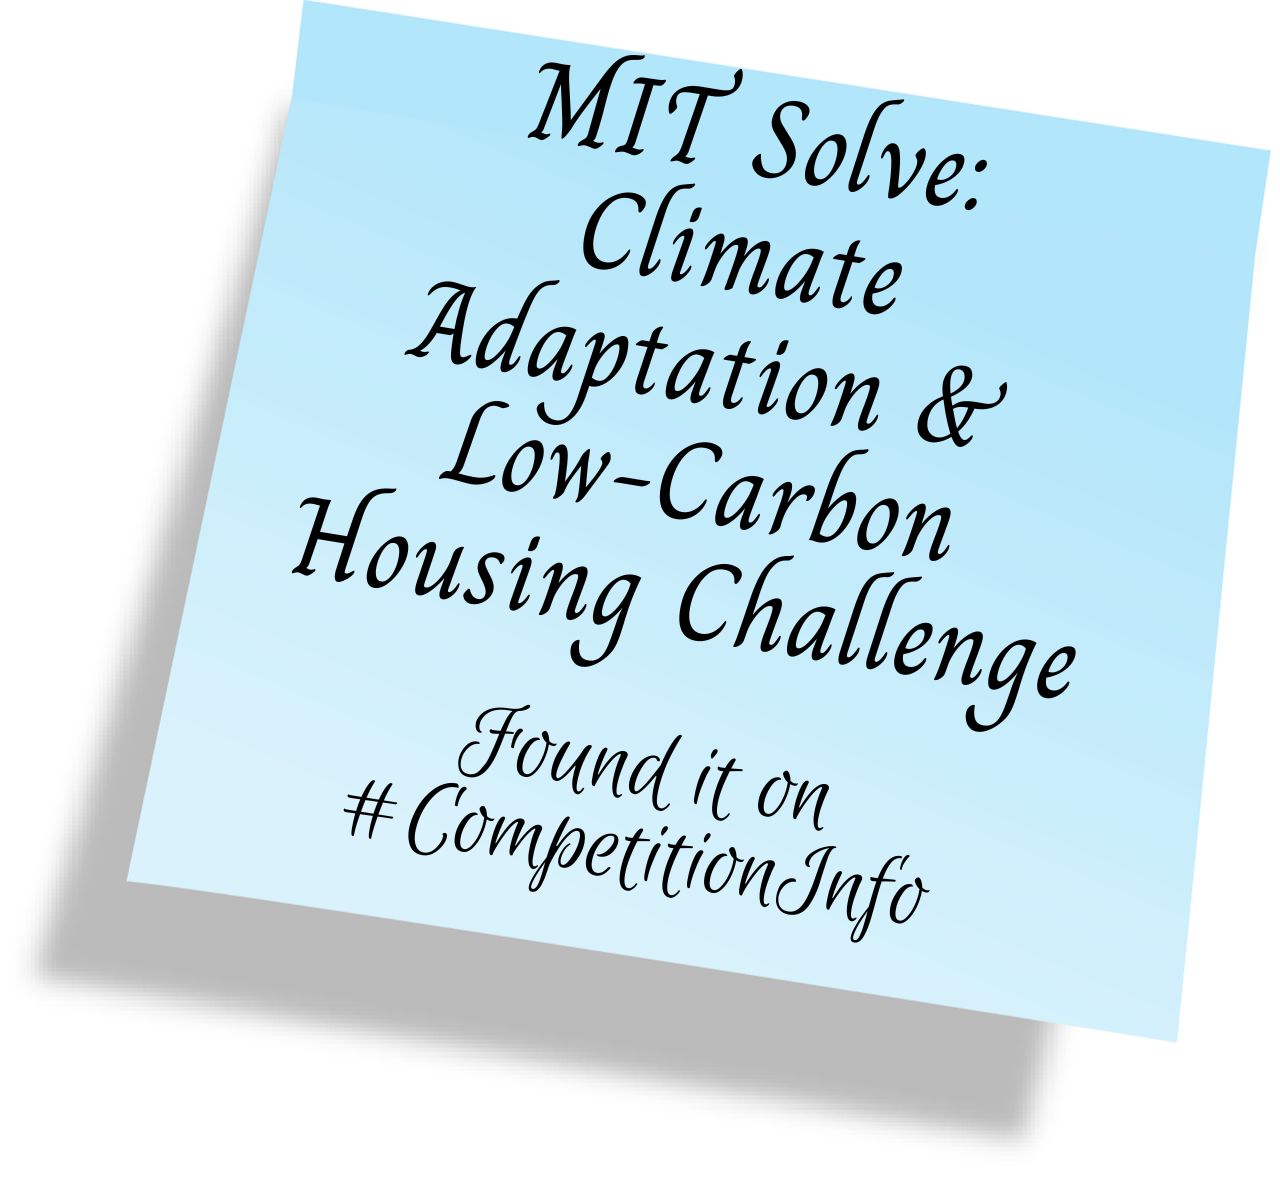 MIT Solve: Climate Adaptation & Low-Carbon Housing Challenge